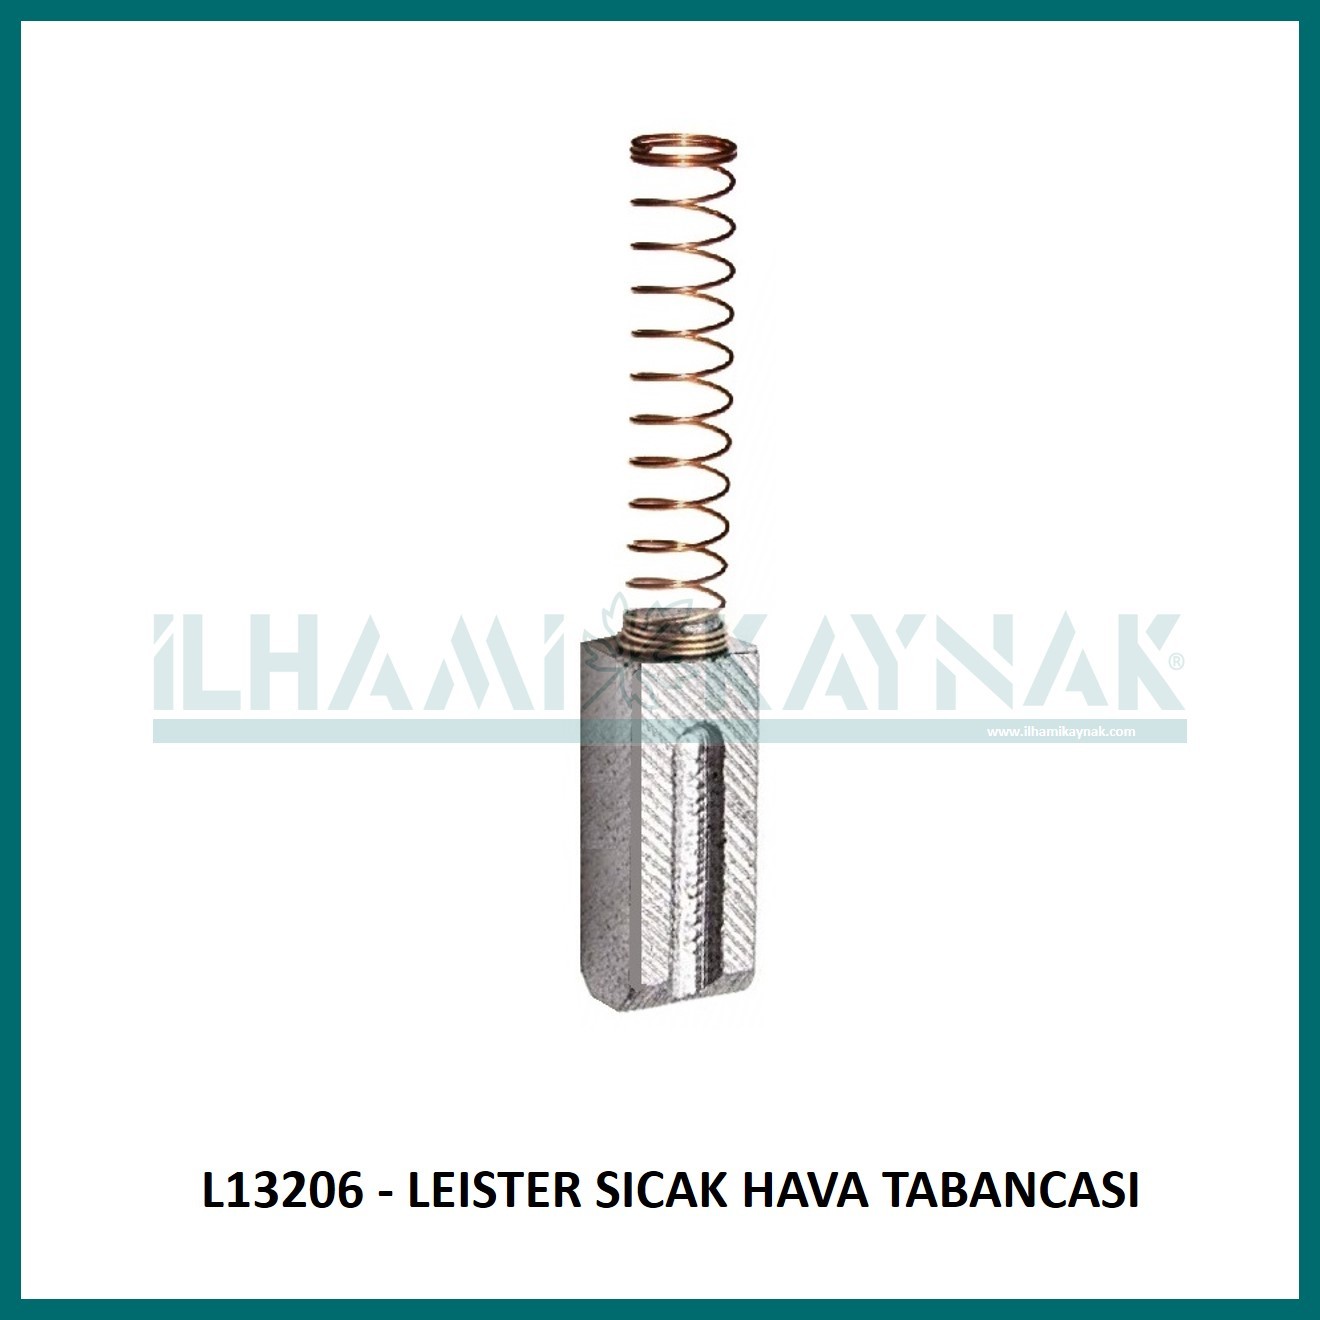 L13206 - LEISTER SICAK HAVA TABANCASI - 5*6*15 mm - 100 Adet